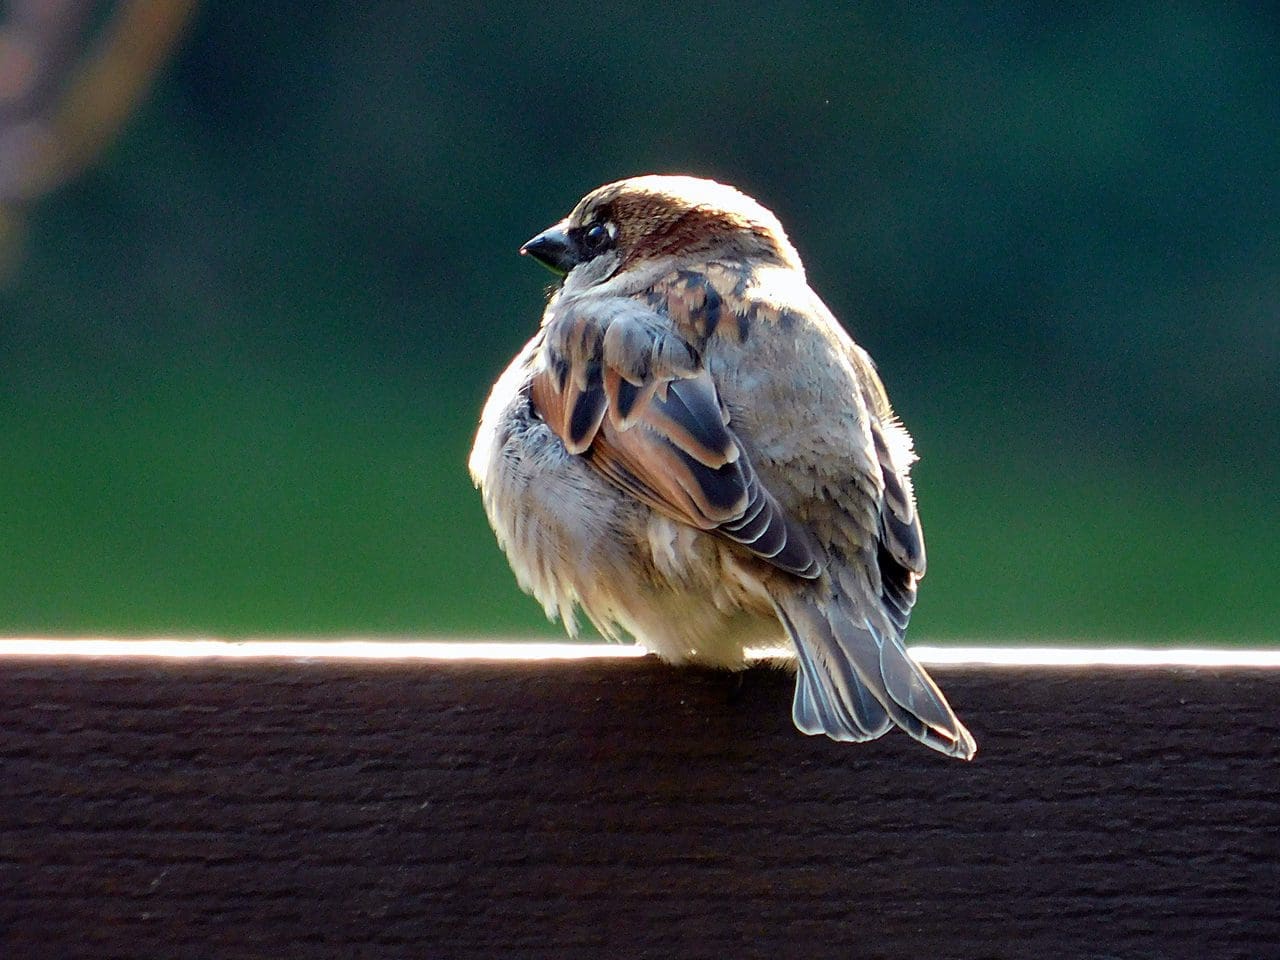 Male sparrow